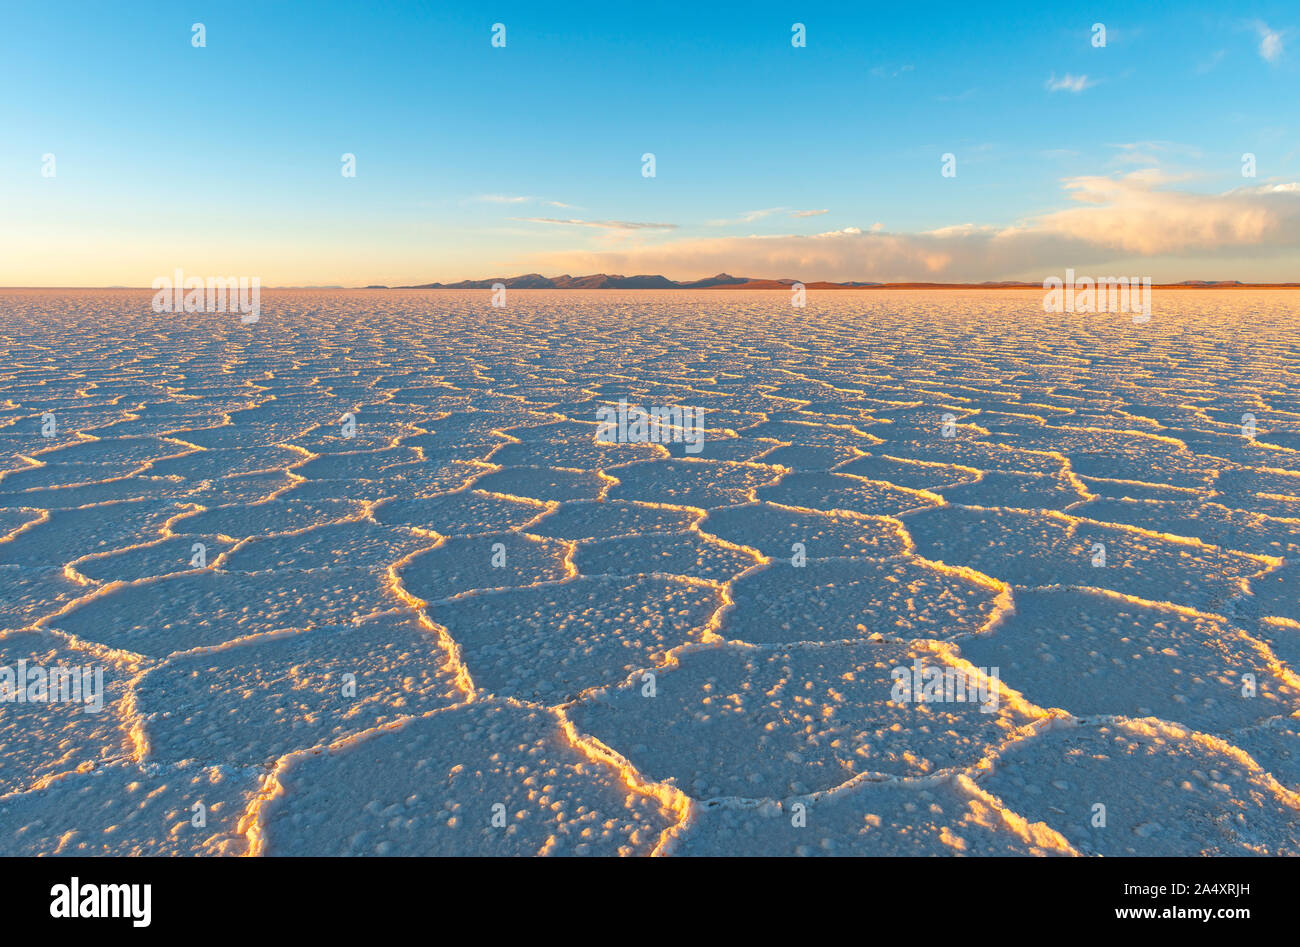 Hexagon salt formations at sunset in the Uyuni salt flat desert (Salar de Uyuni), Bolivia. Stock Photo